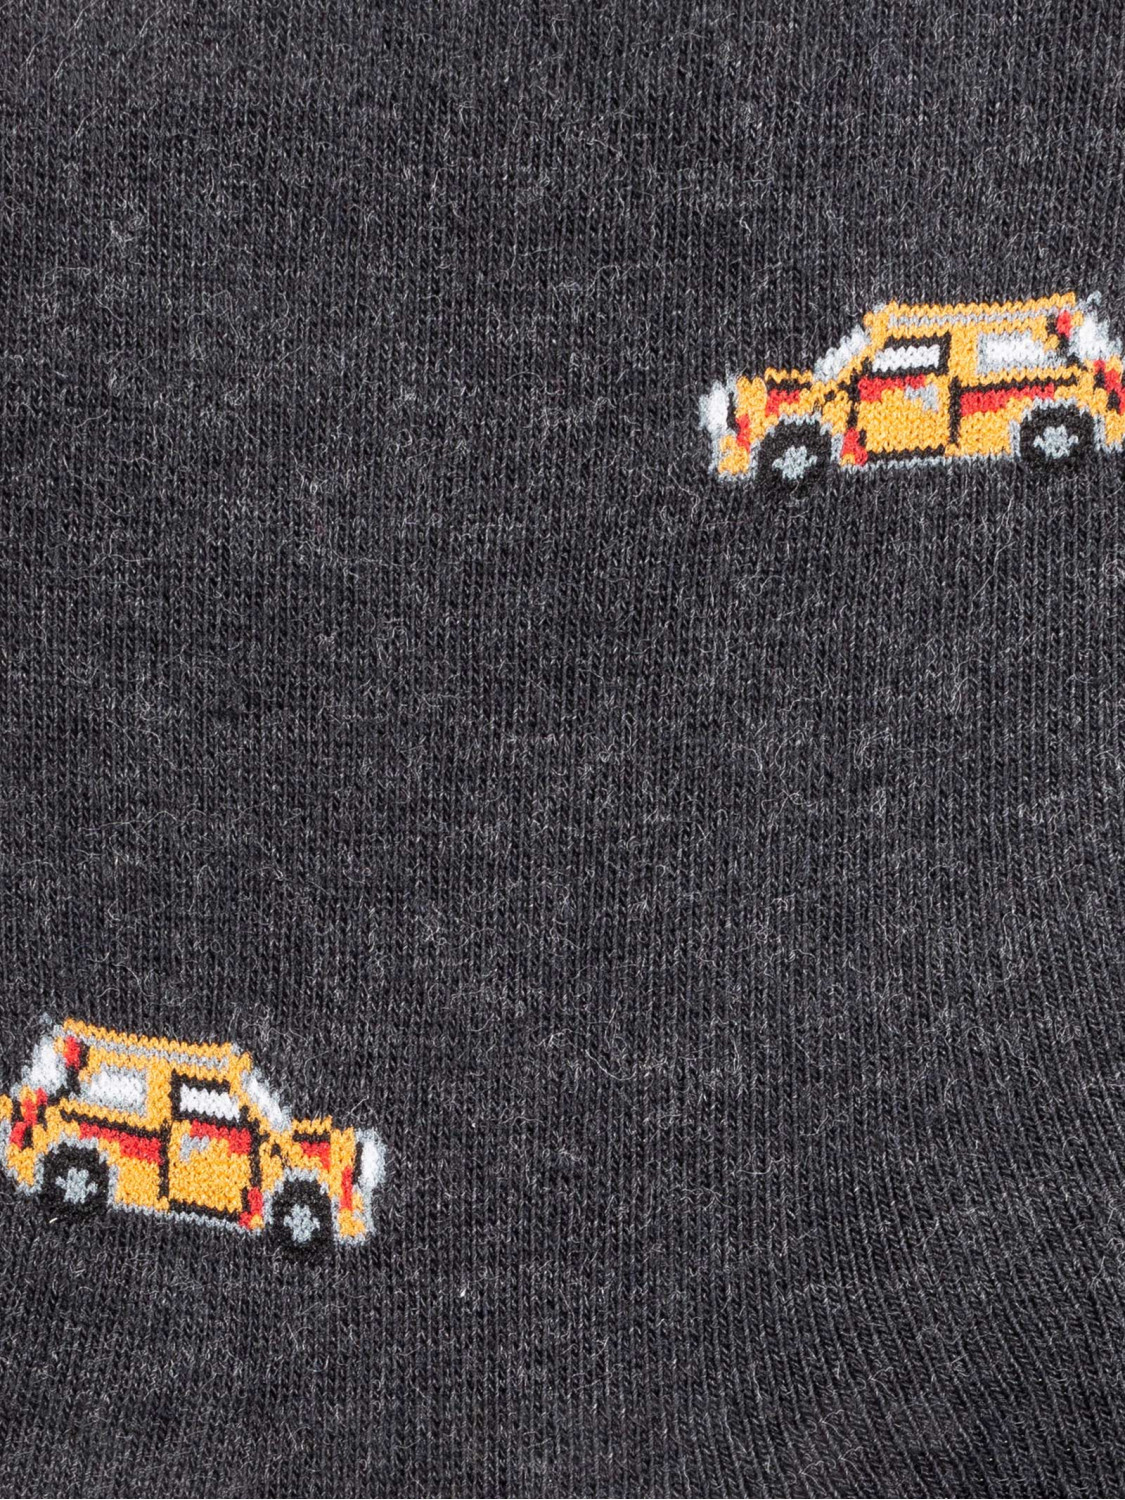 Little cars pattern Men's Crew Socks